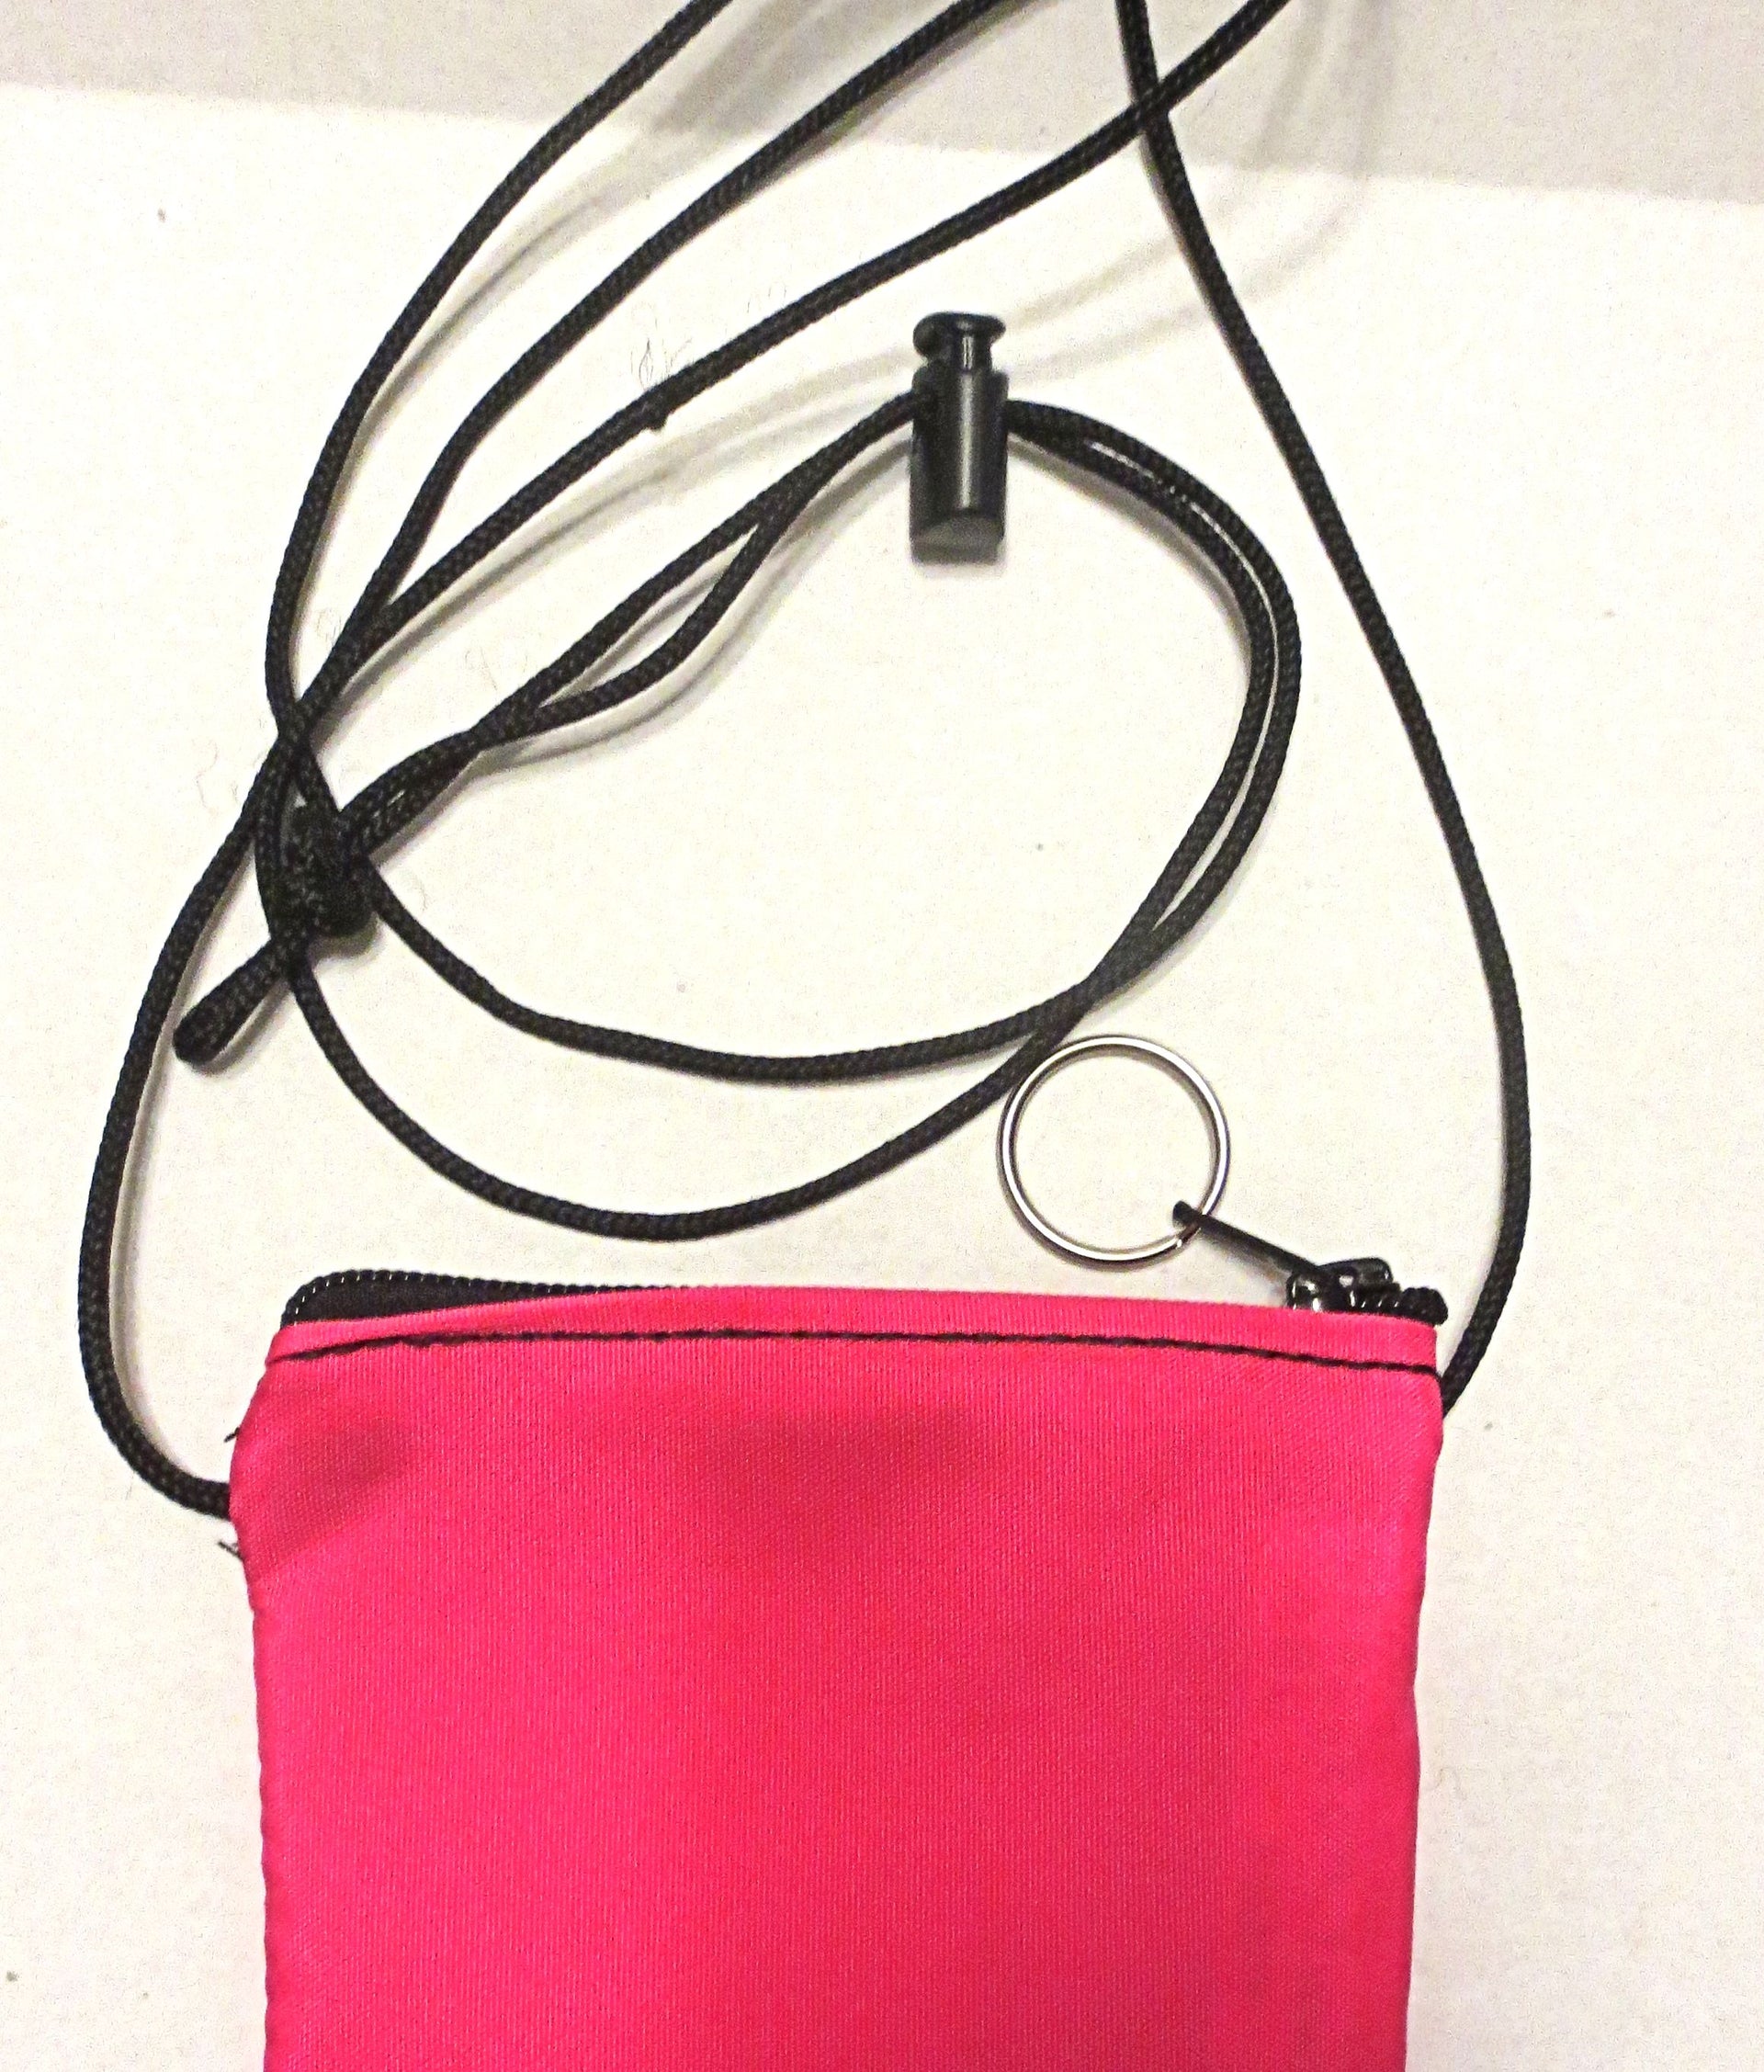 bag add ons cording with cord locks 60" long adjustable